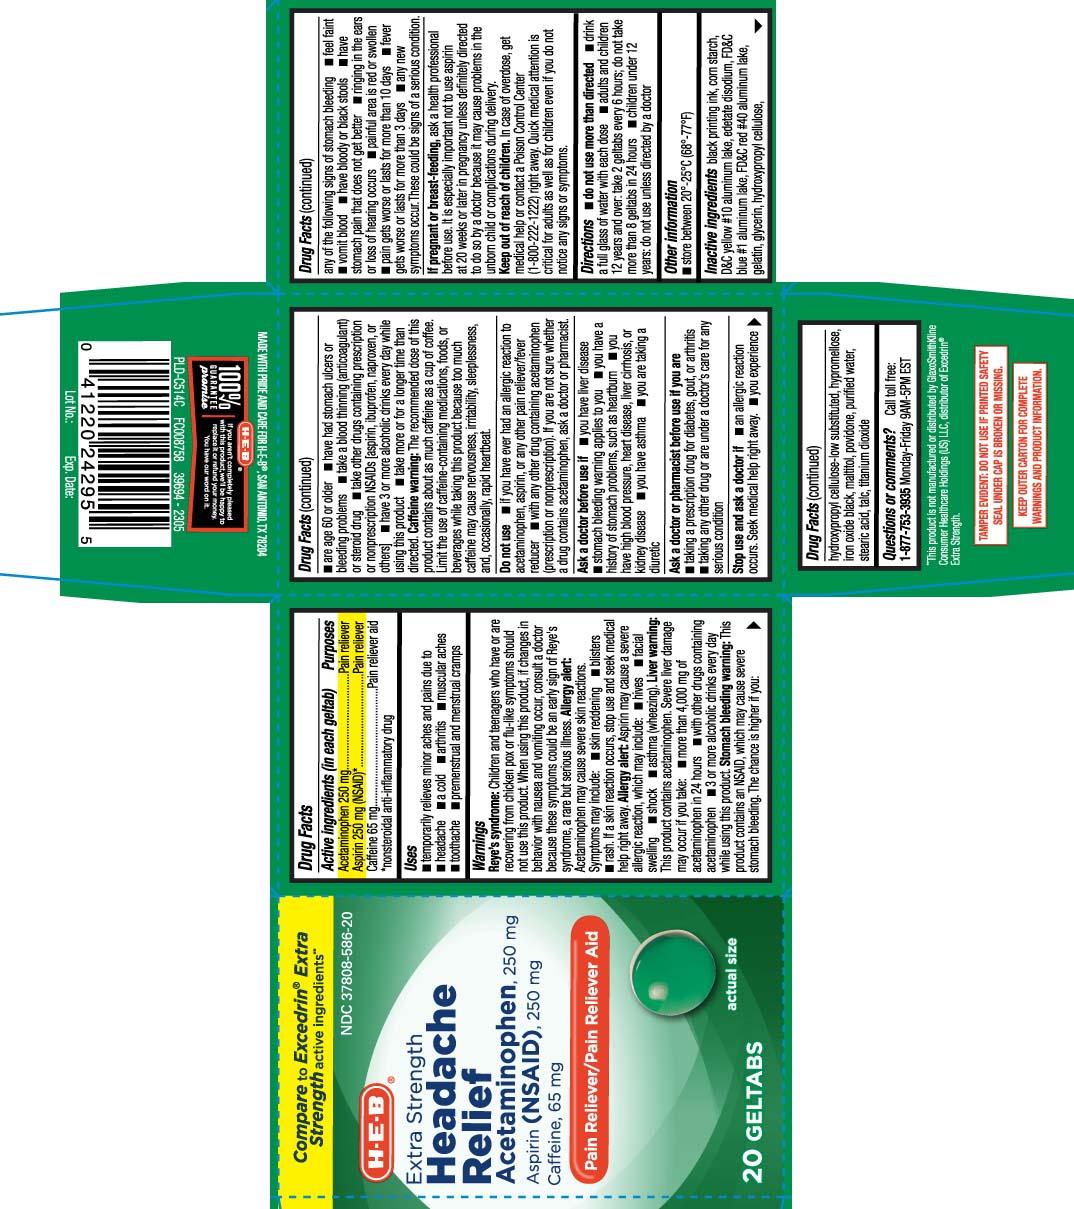 Acetaminophen 250 mg, Aspirin 250 mg (NSAID)*, Caffeine 65 mg, *nonsteroidal anti-inflammatory drug